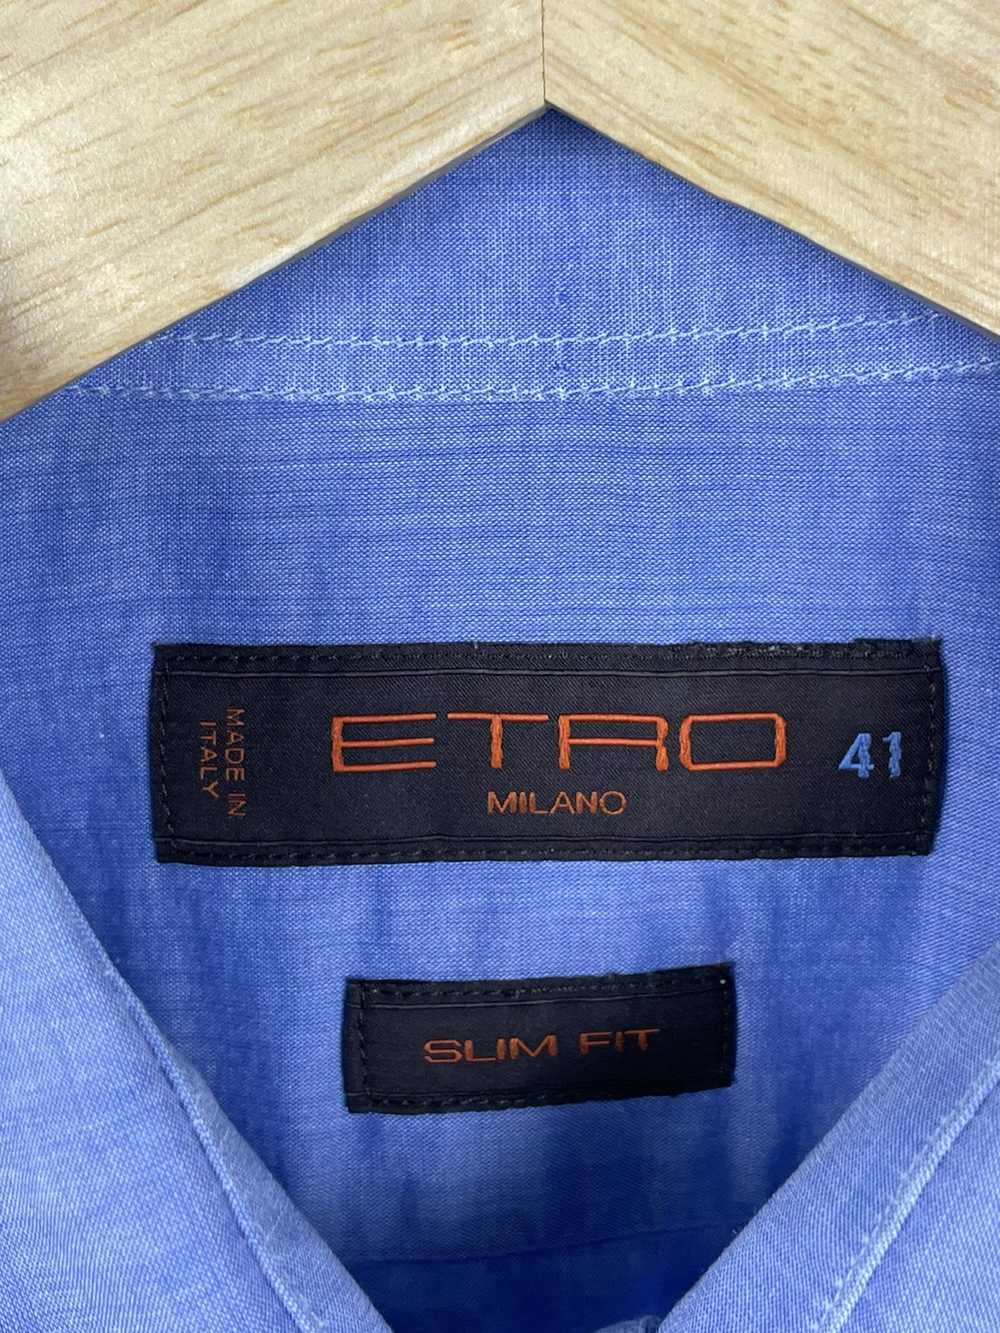 Etro Etro milano Men Shirt Button up size 41-L - image 3